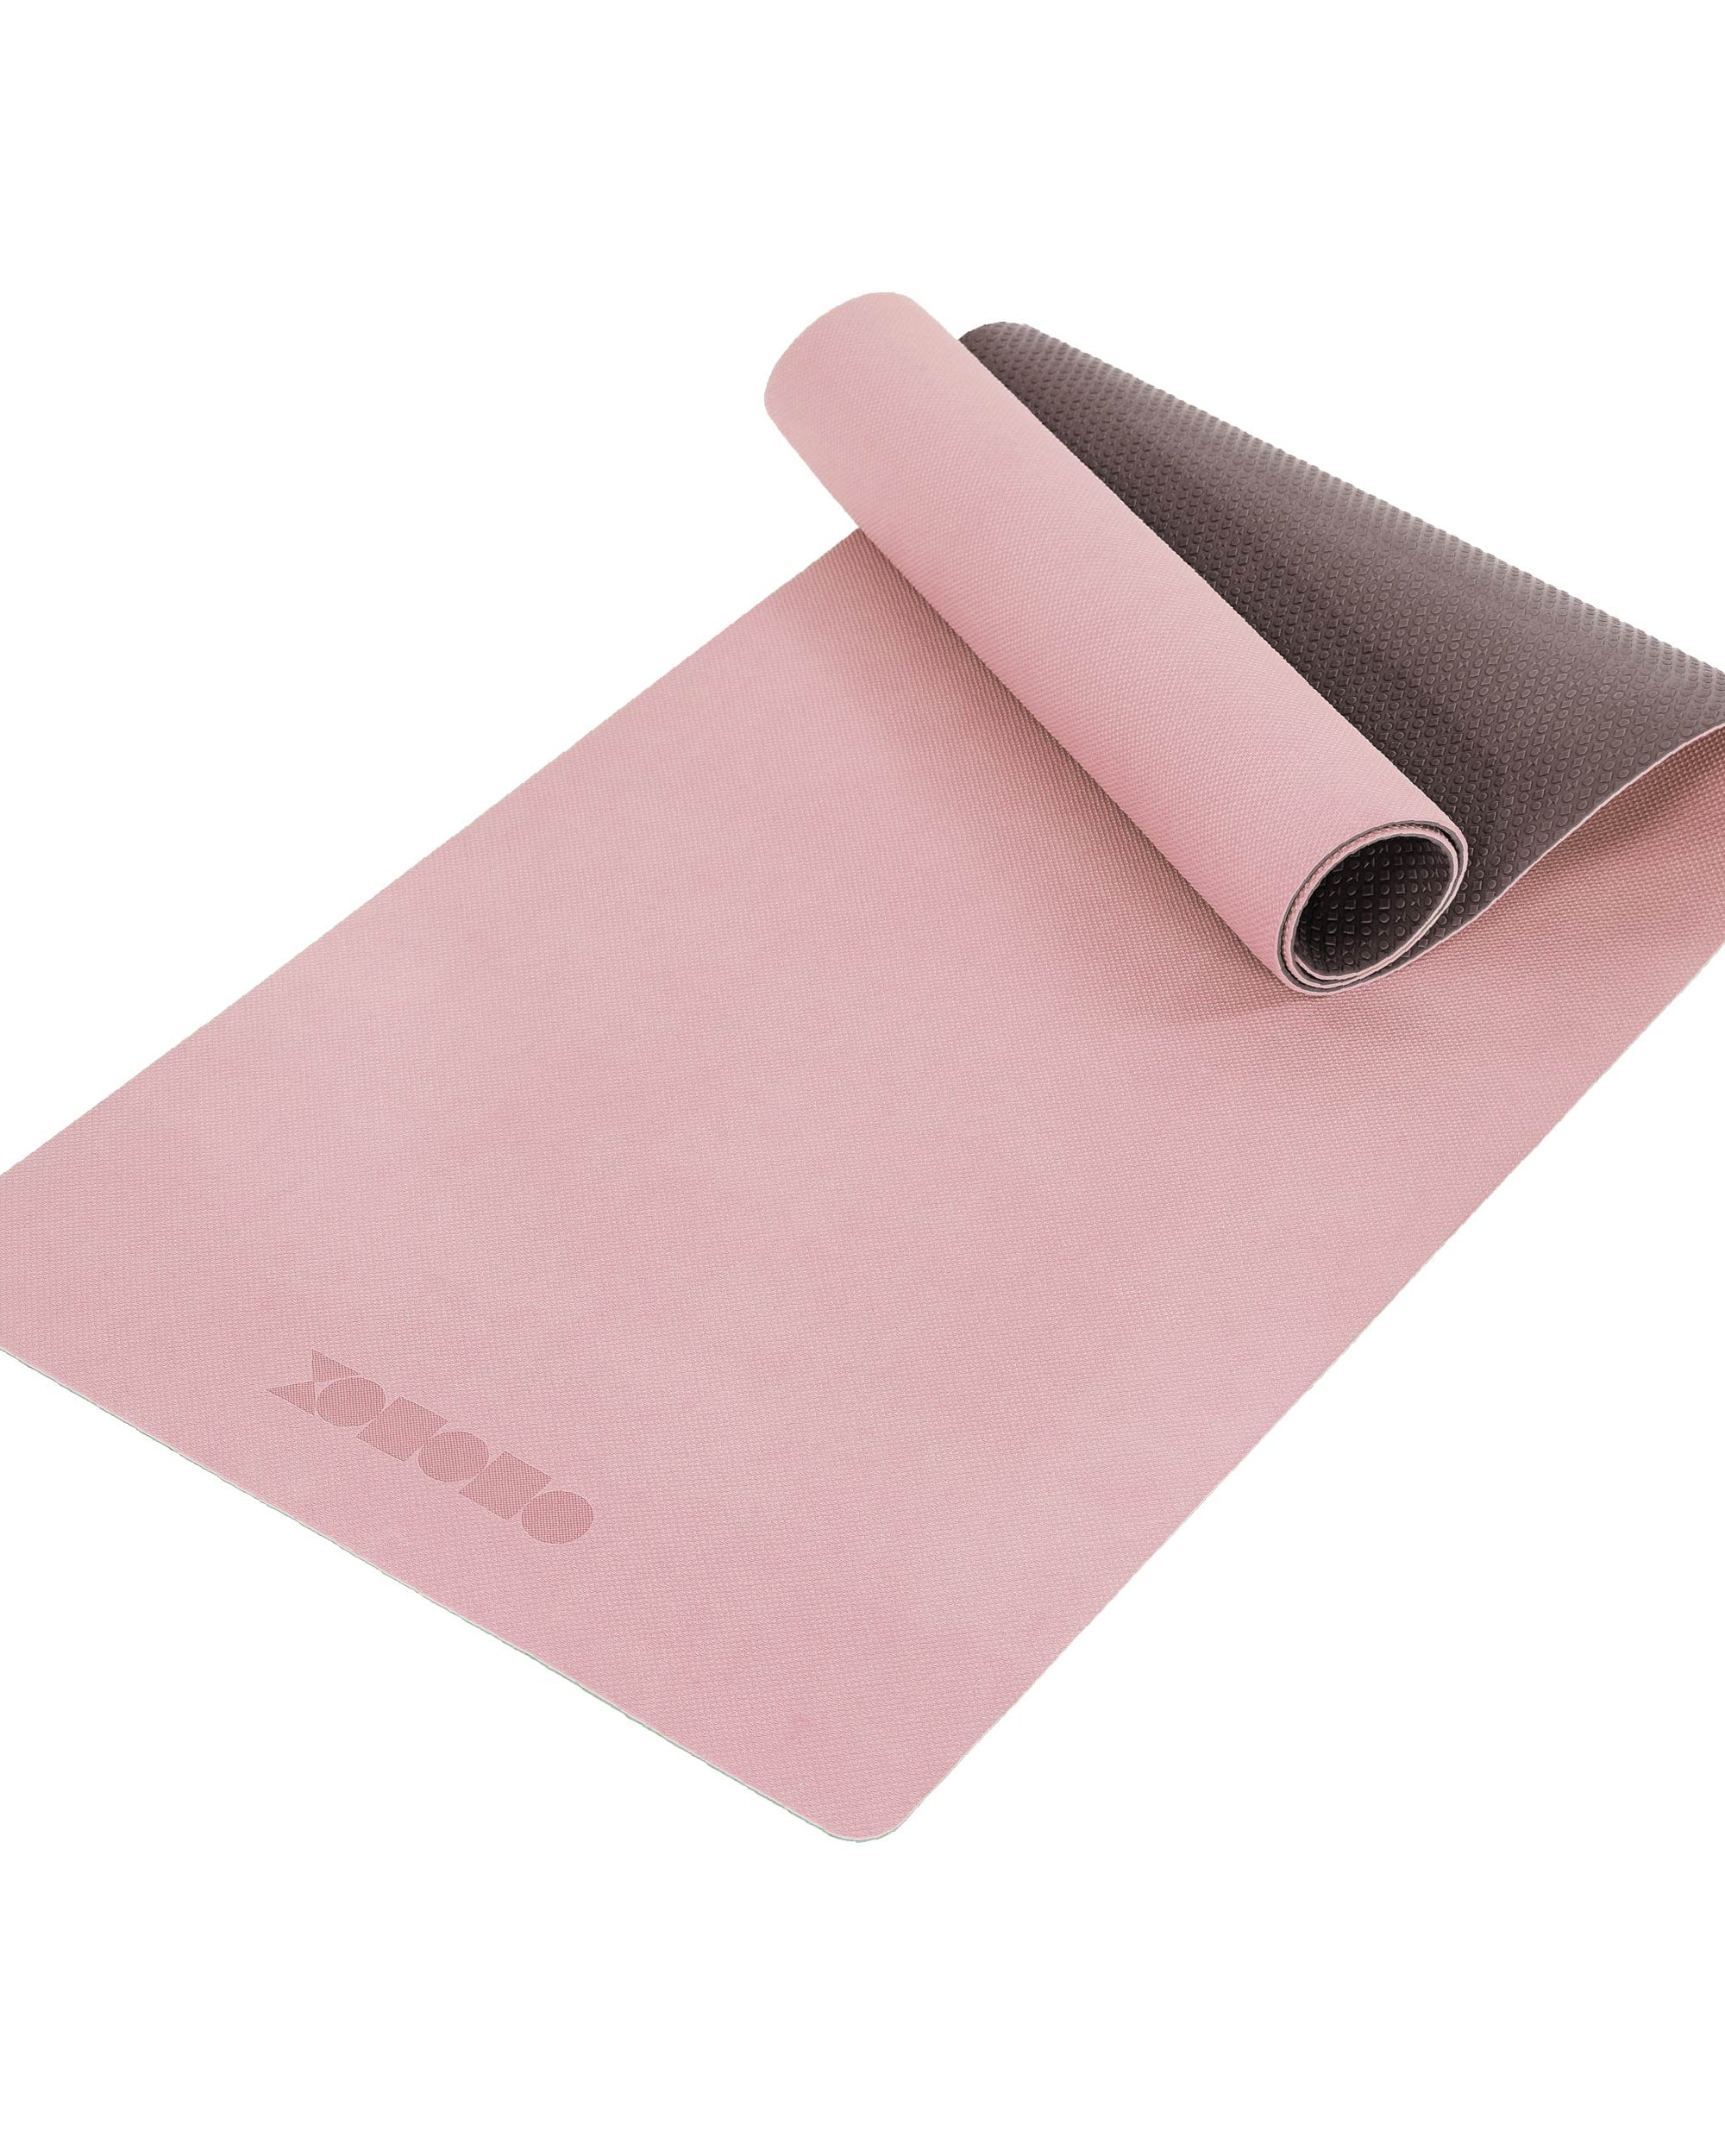 Eco-friendly TPE non-slip sports fitness yoga mat Pink/Brown - ododos